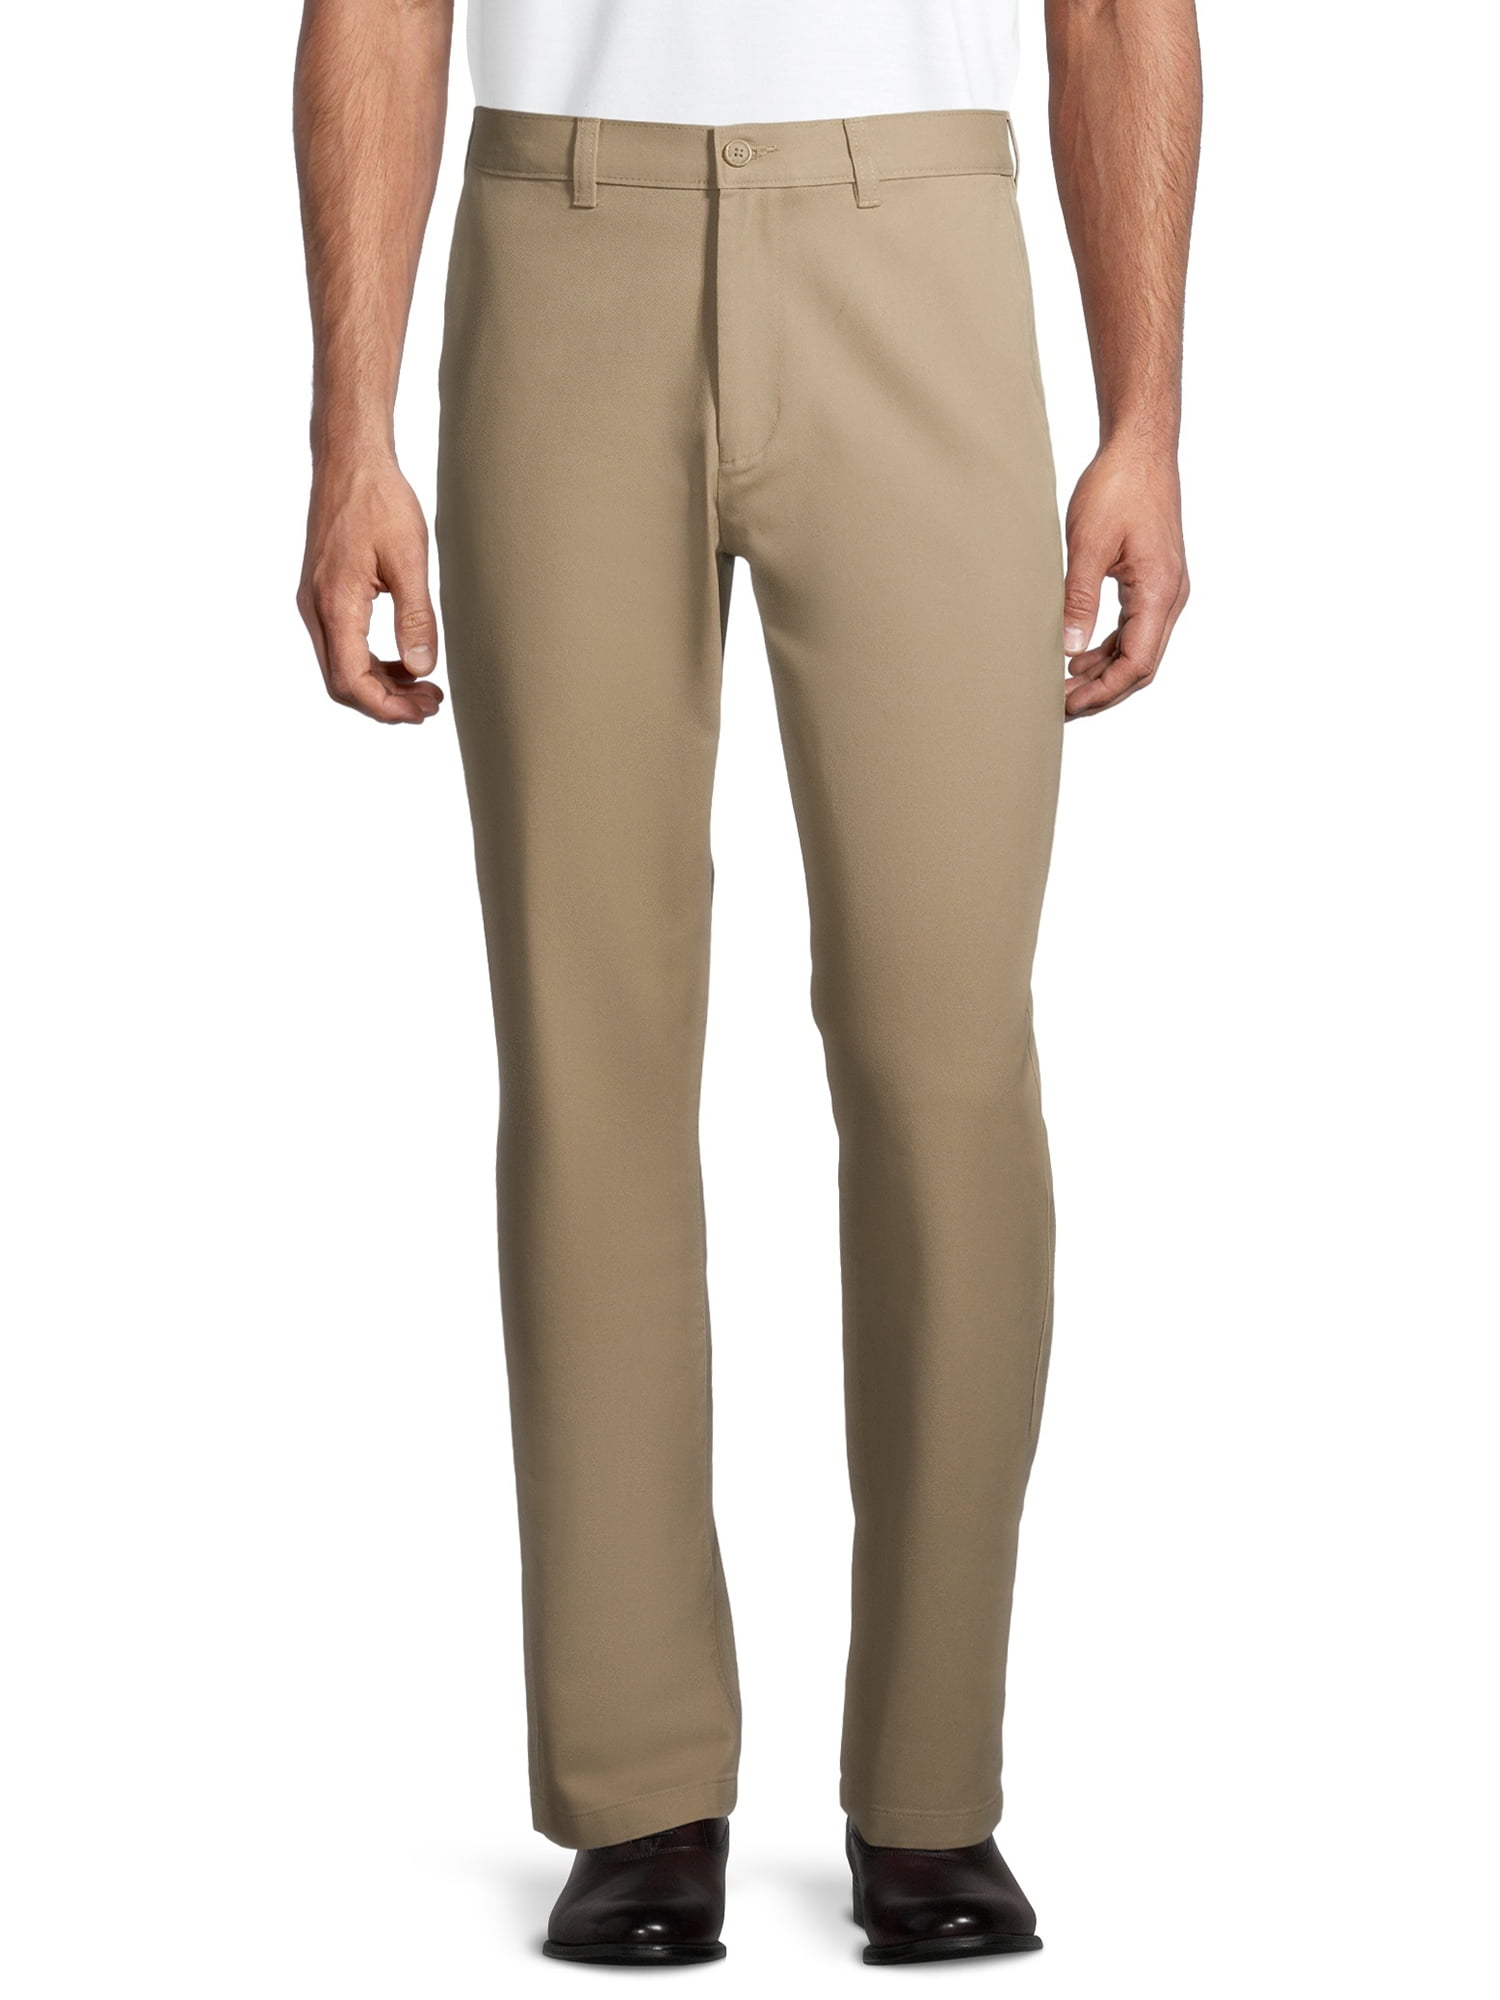 George Big Men's Flat Front Wrinkle Resistant Pants - Walmart.com